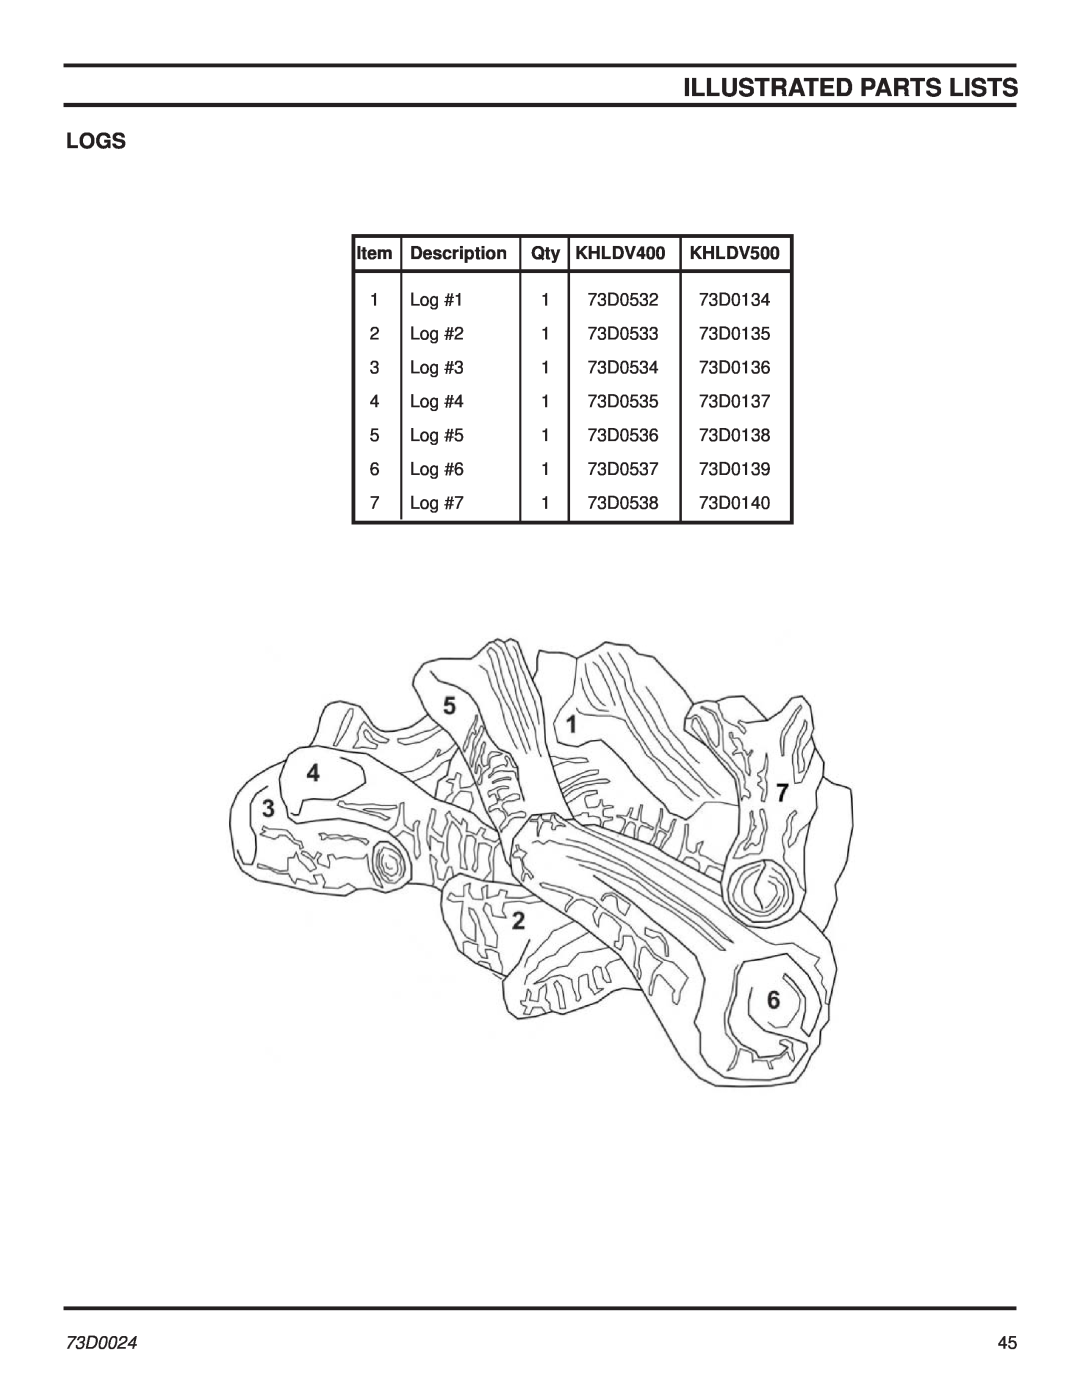 Monessen Hearth KHLDV SERIES manual Illustrated Parts Lists, Logs, Log #1, 73D0024 